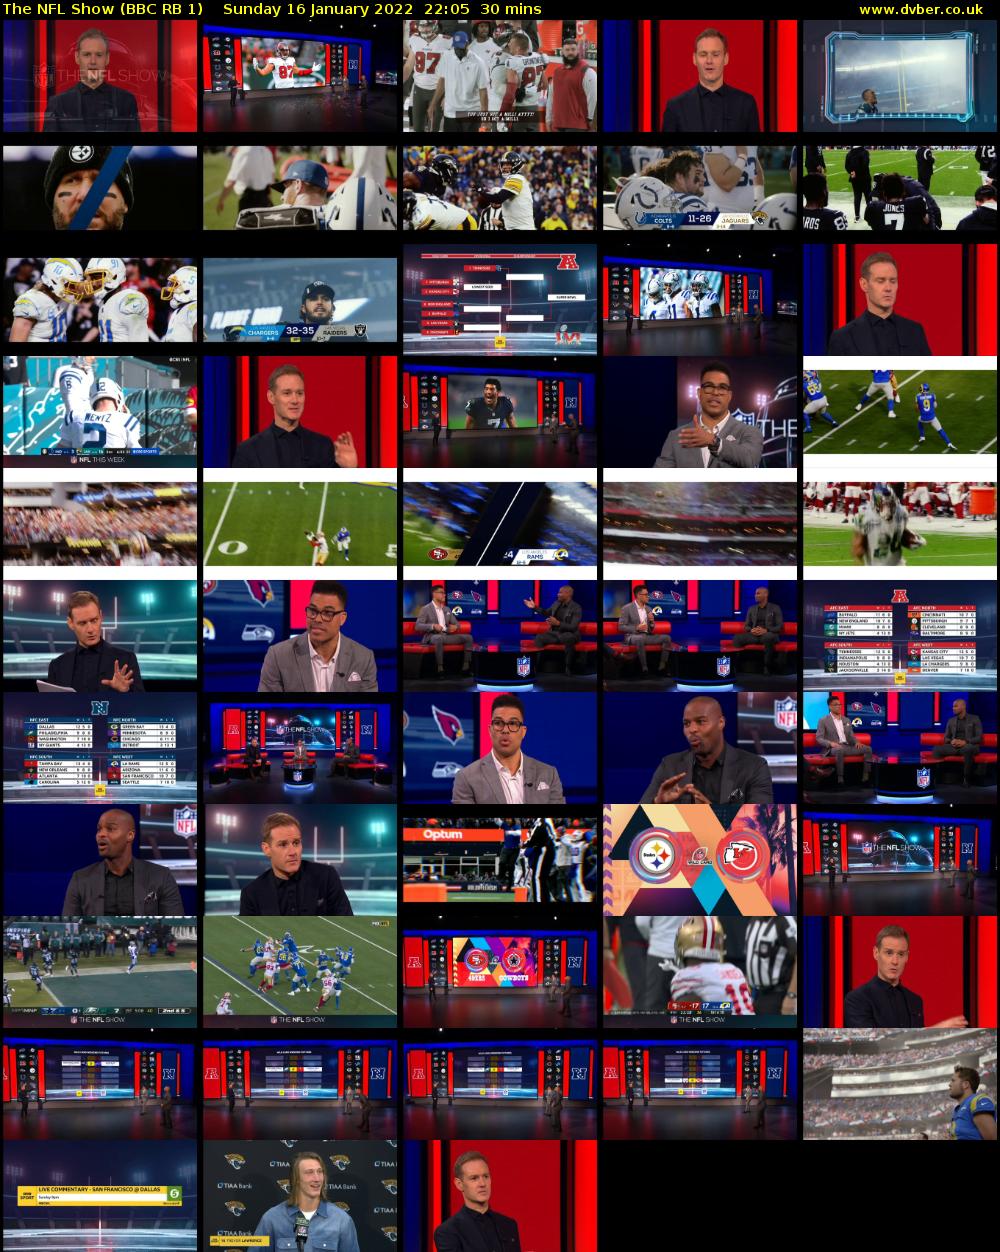 The NFL Show (BBC RB 1) Sunday 16 January 2022 22:05 - 22:35